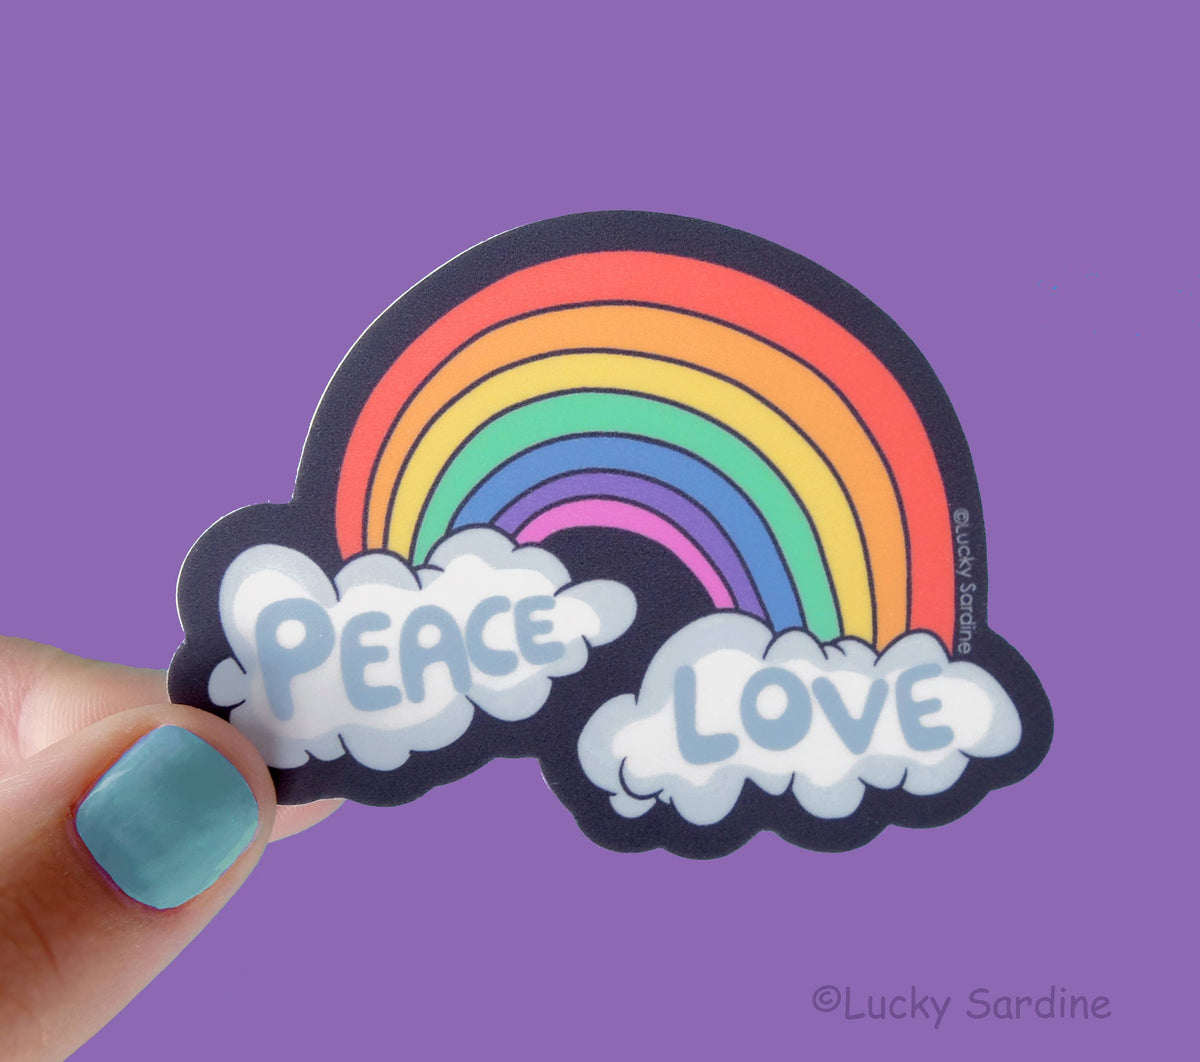 Retro Rainbow & Cloud PEACE, LOVE vinyl sticker